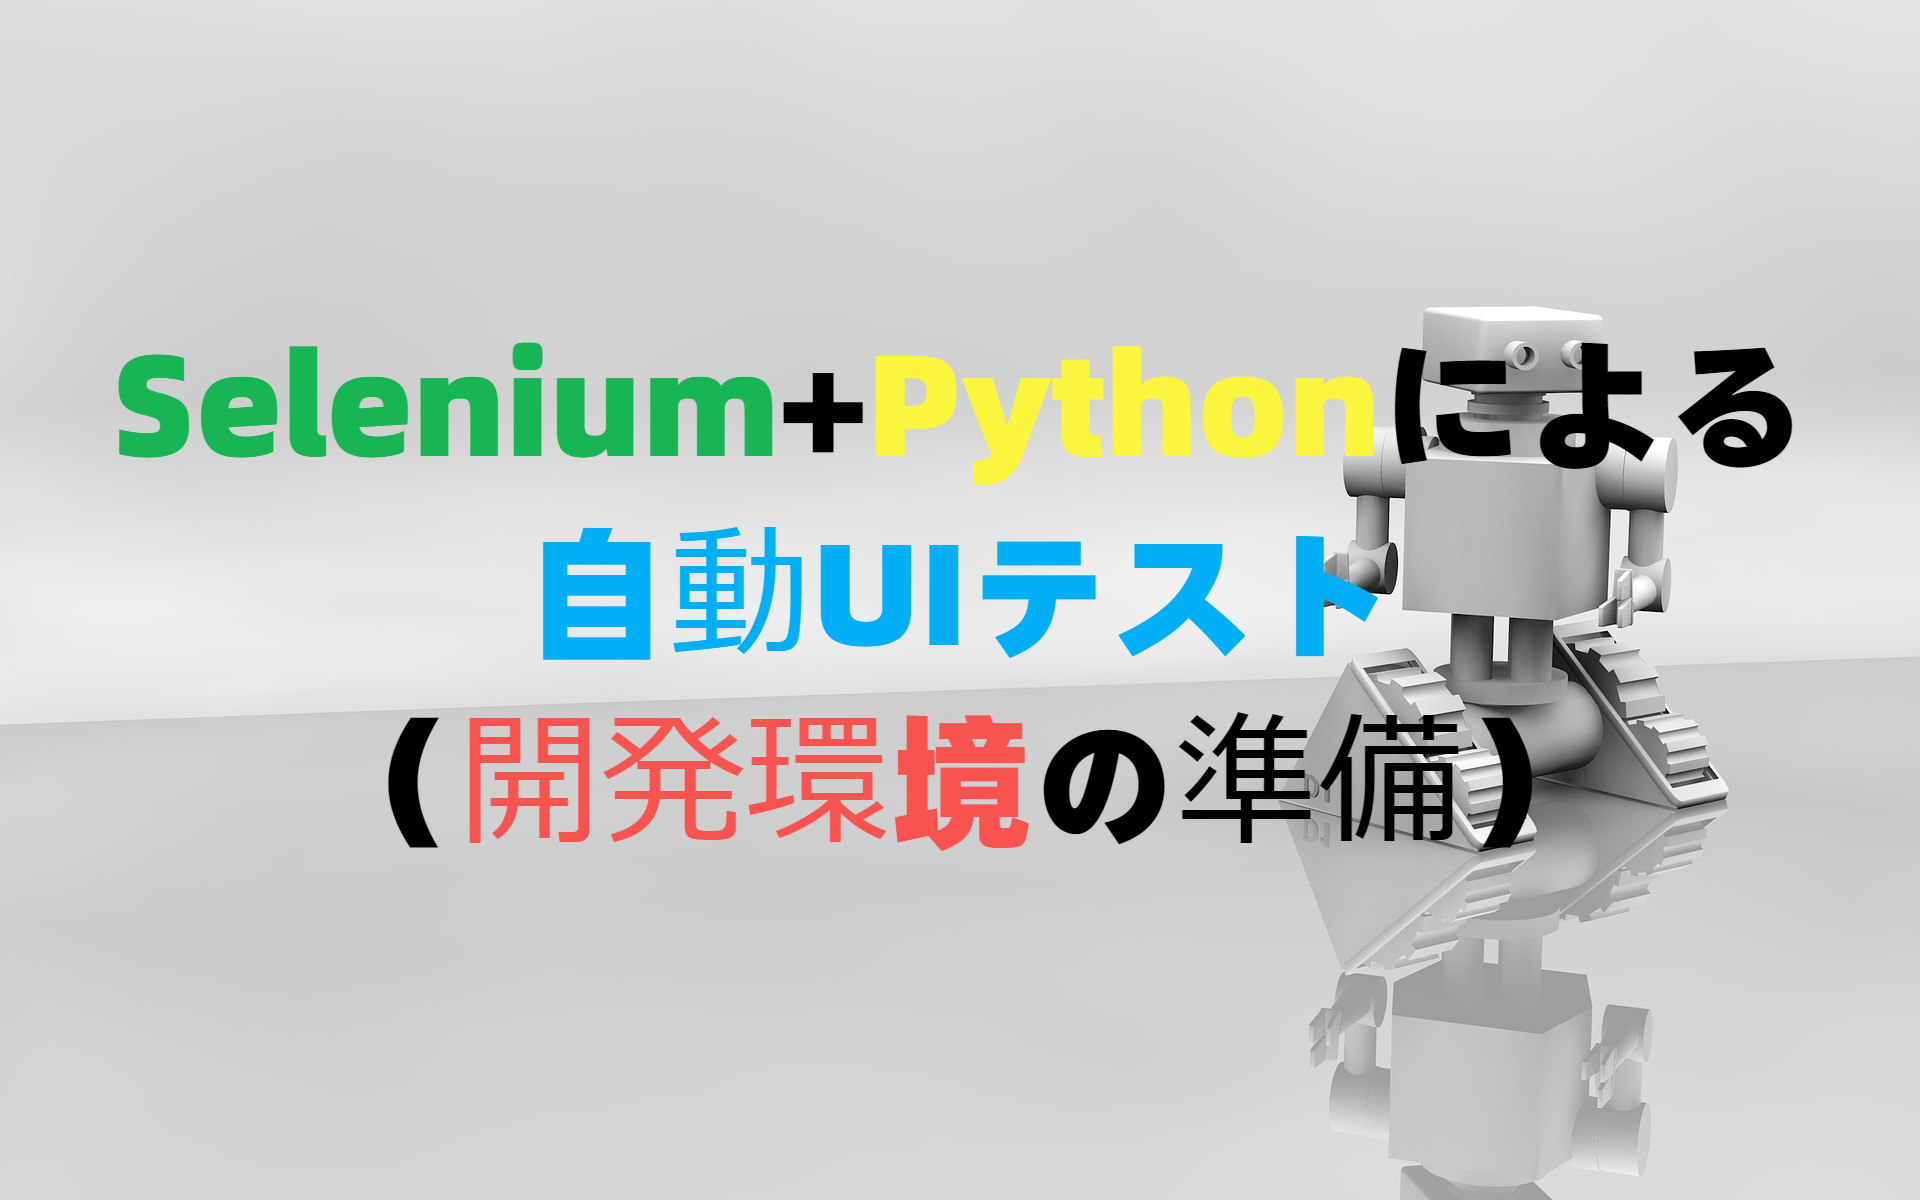 Selenium+pythonによる自動UIテスト（開発環境の準備）